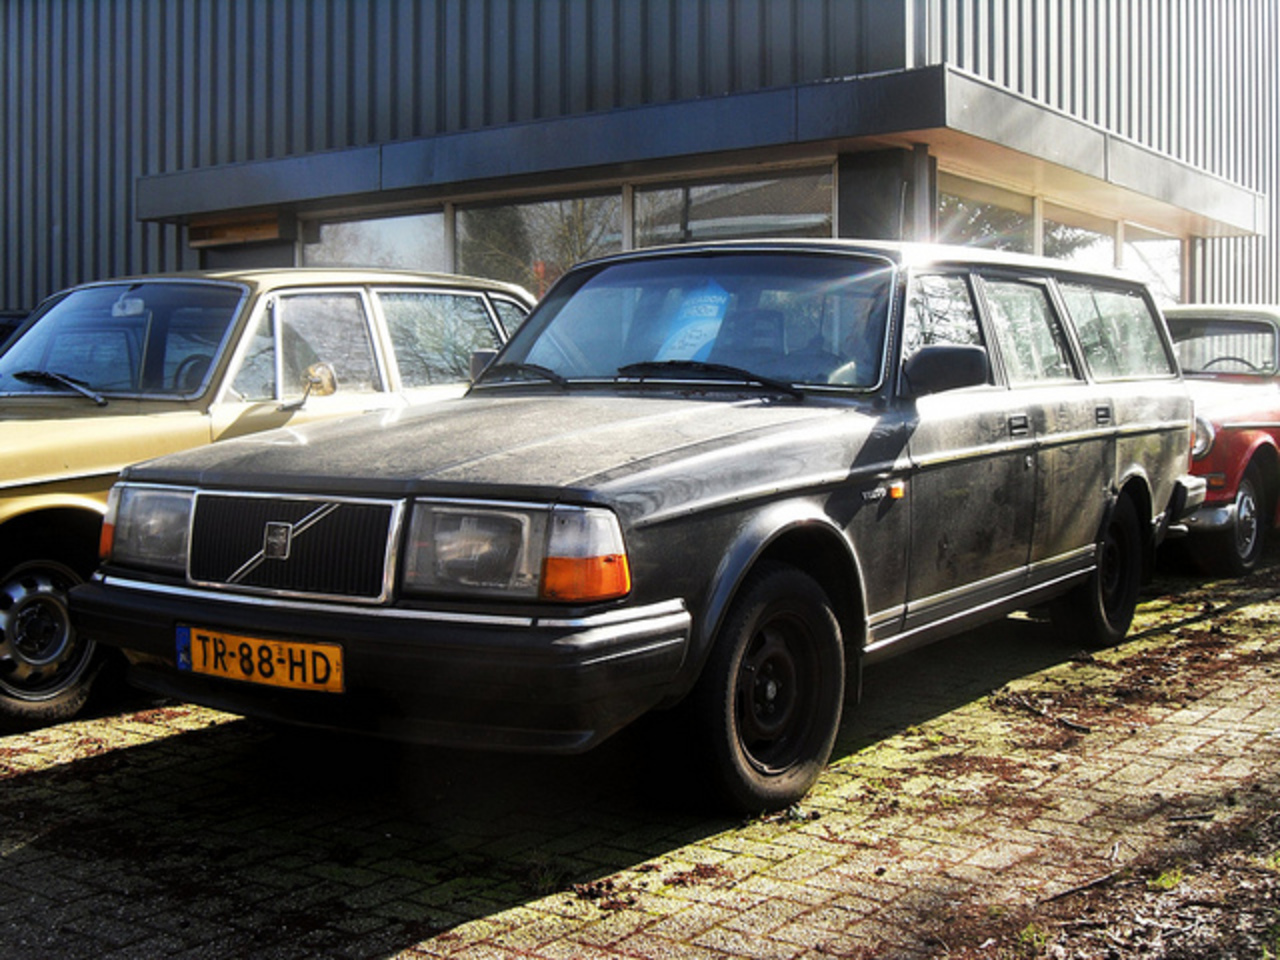 1988 Volvo 245 GL TR-88-HD | Flickr - Photo Sharing!